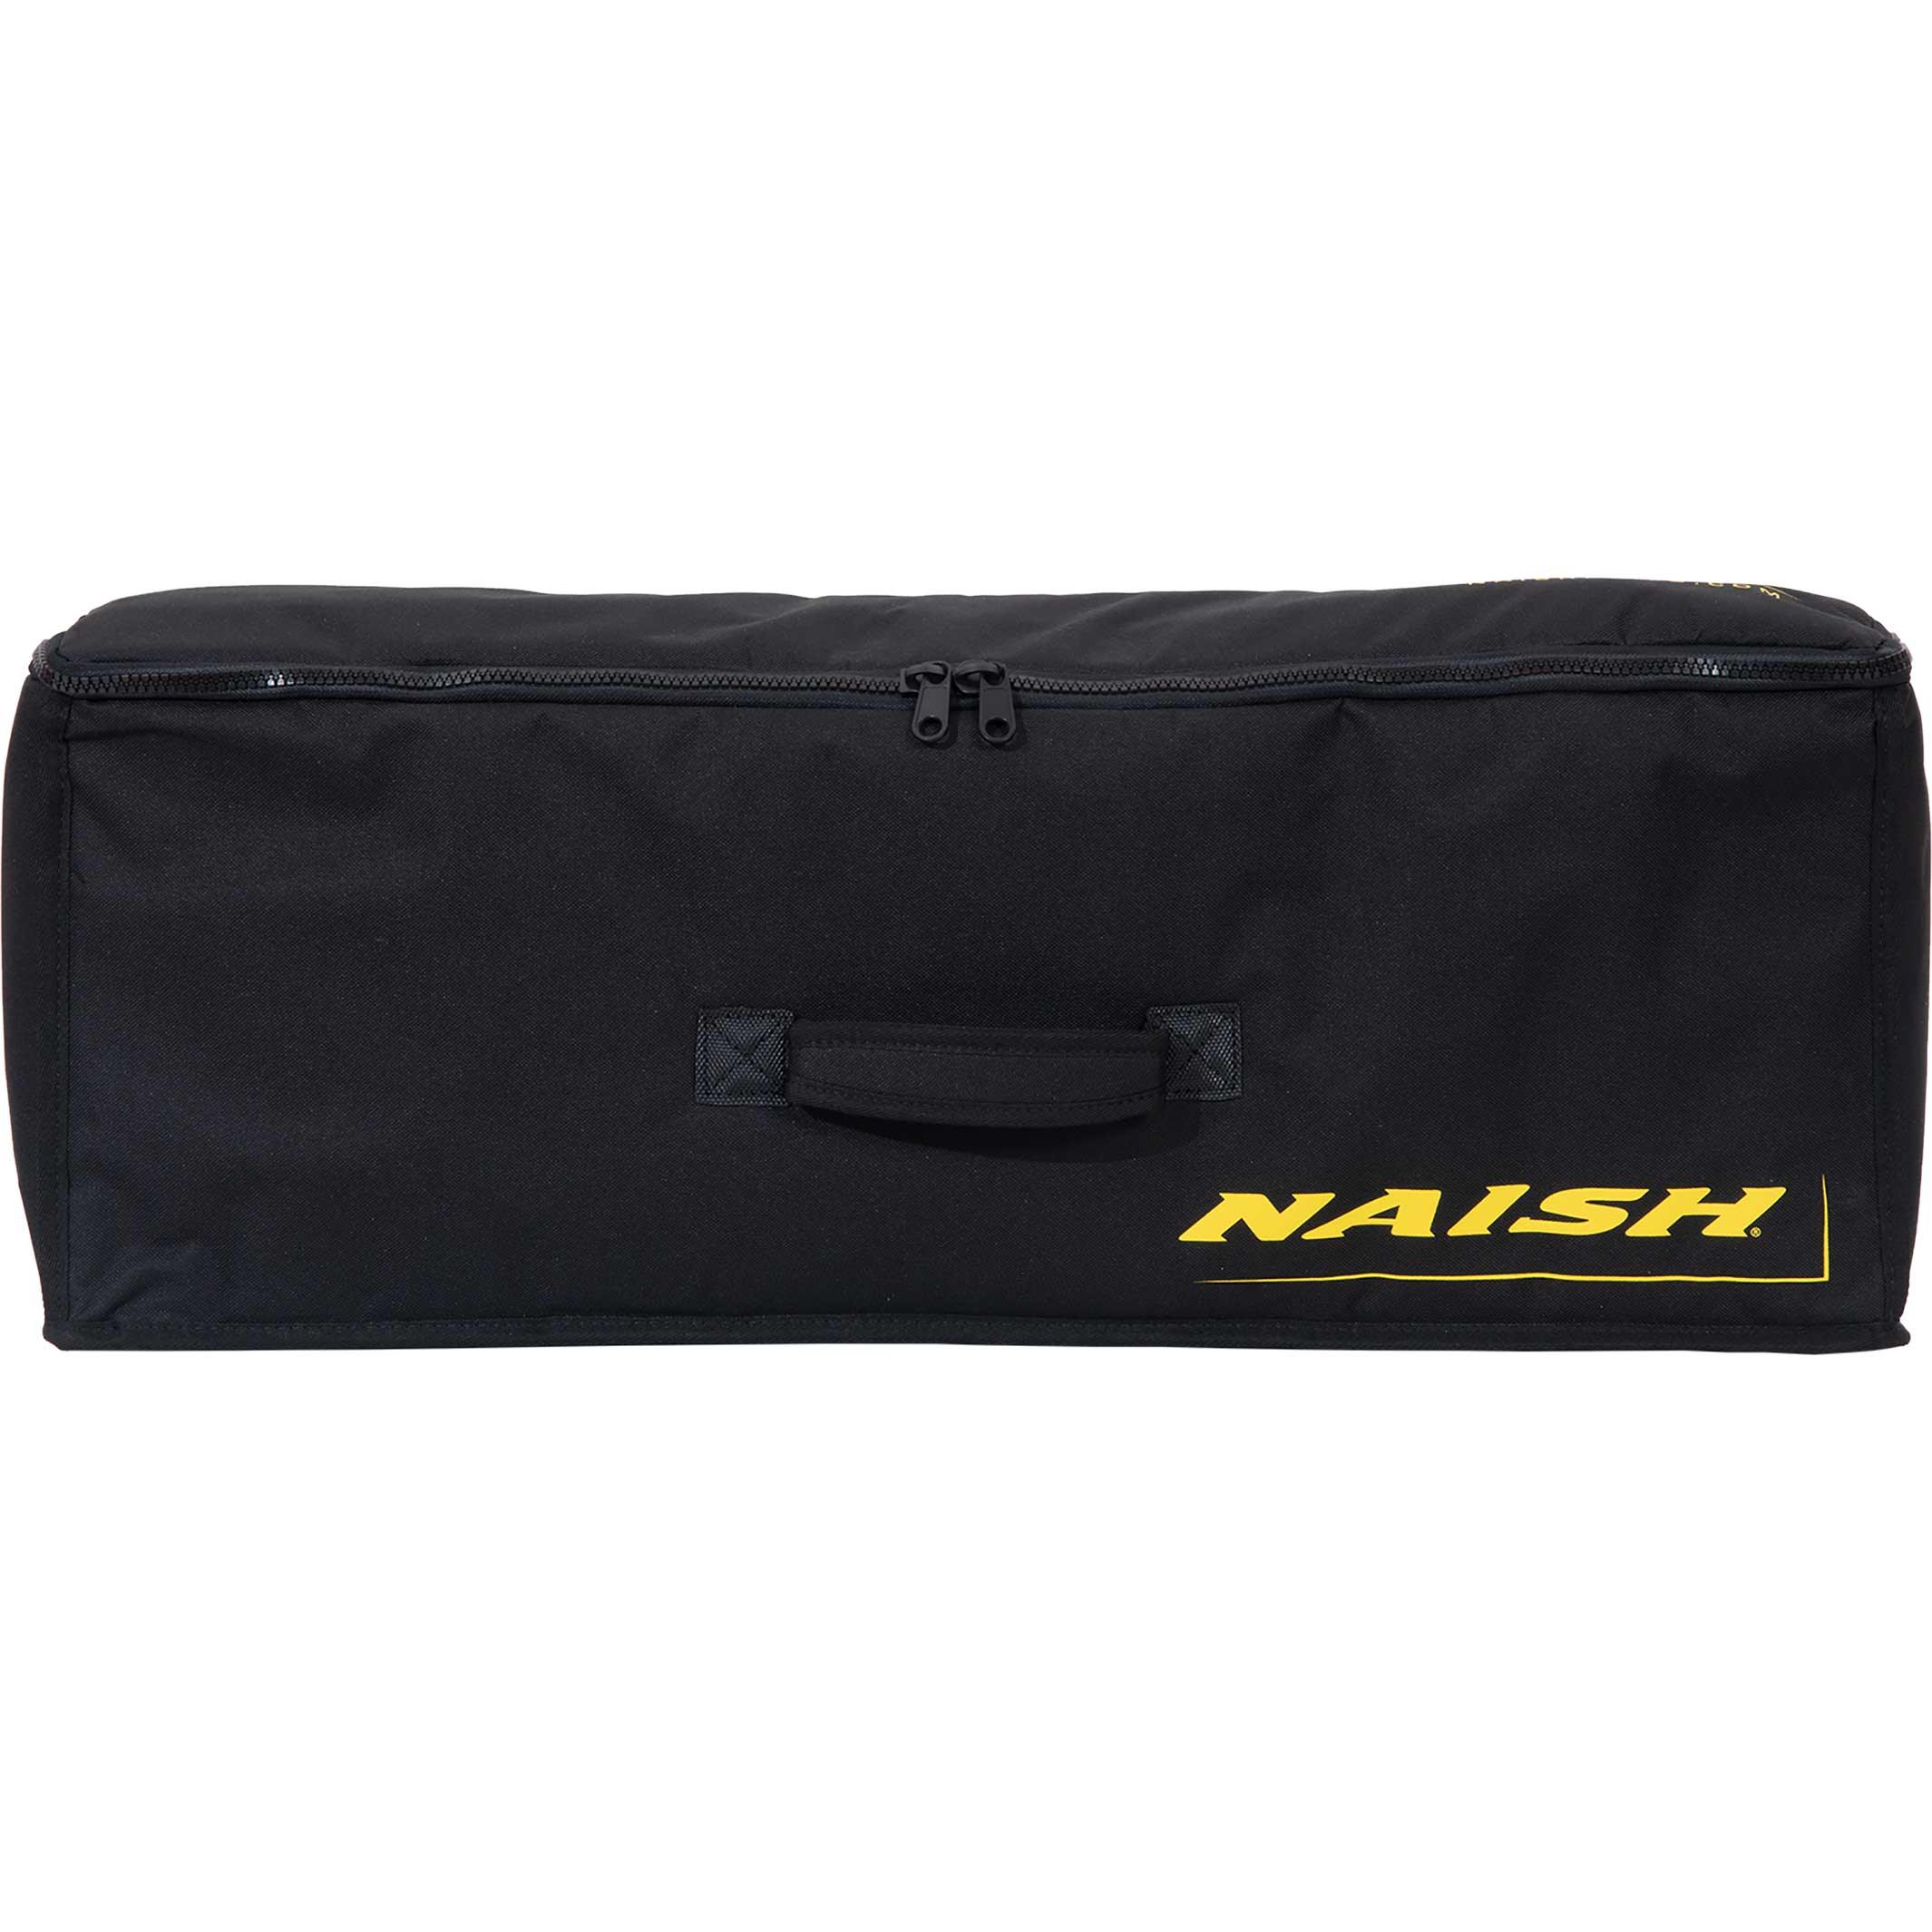 S26 Foil Case - Naish.com